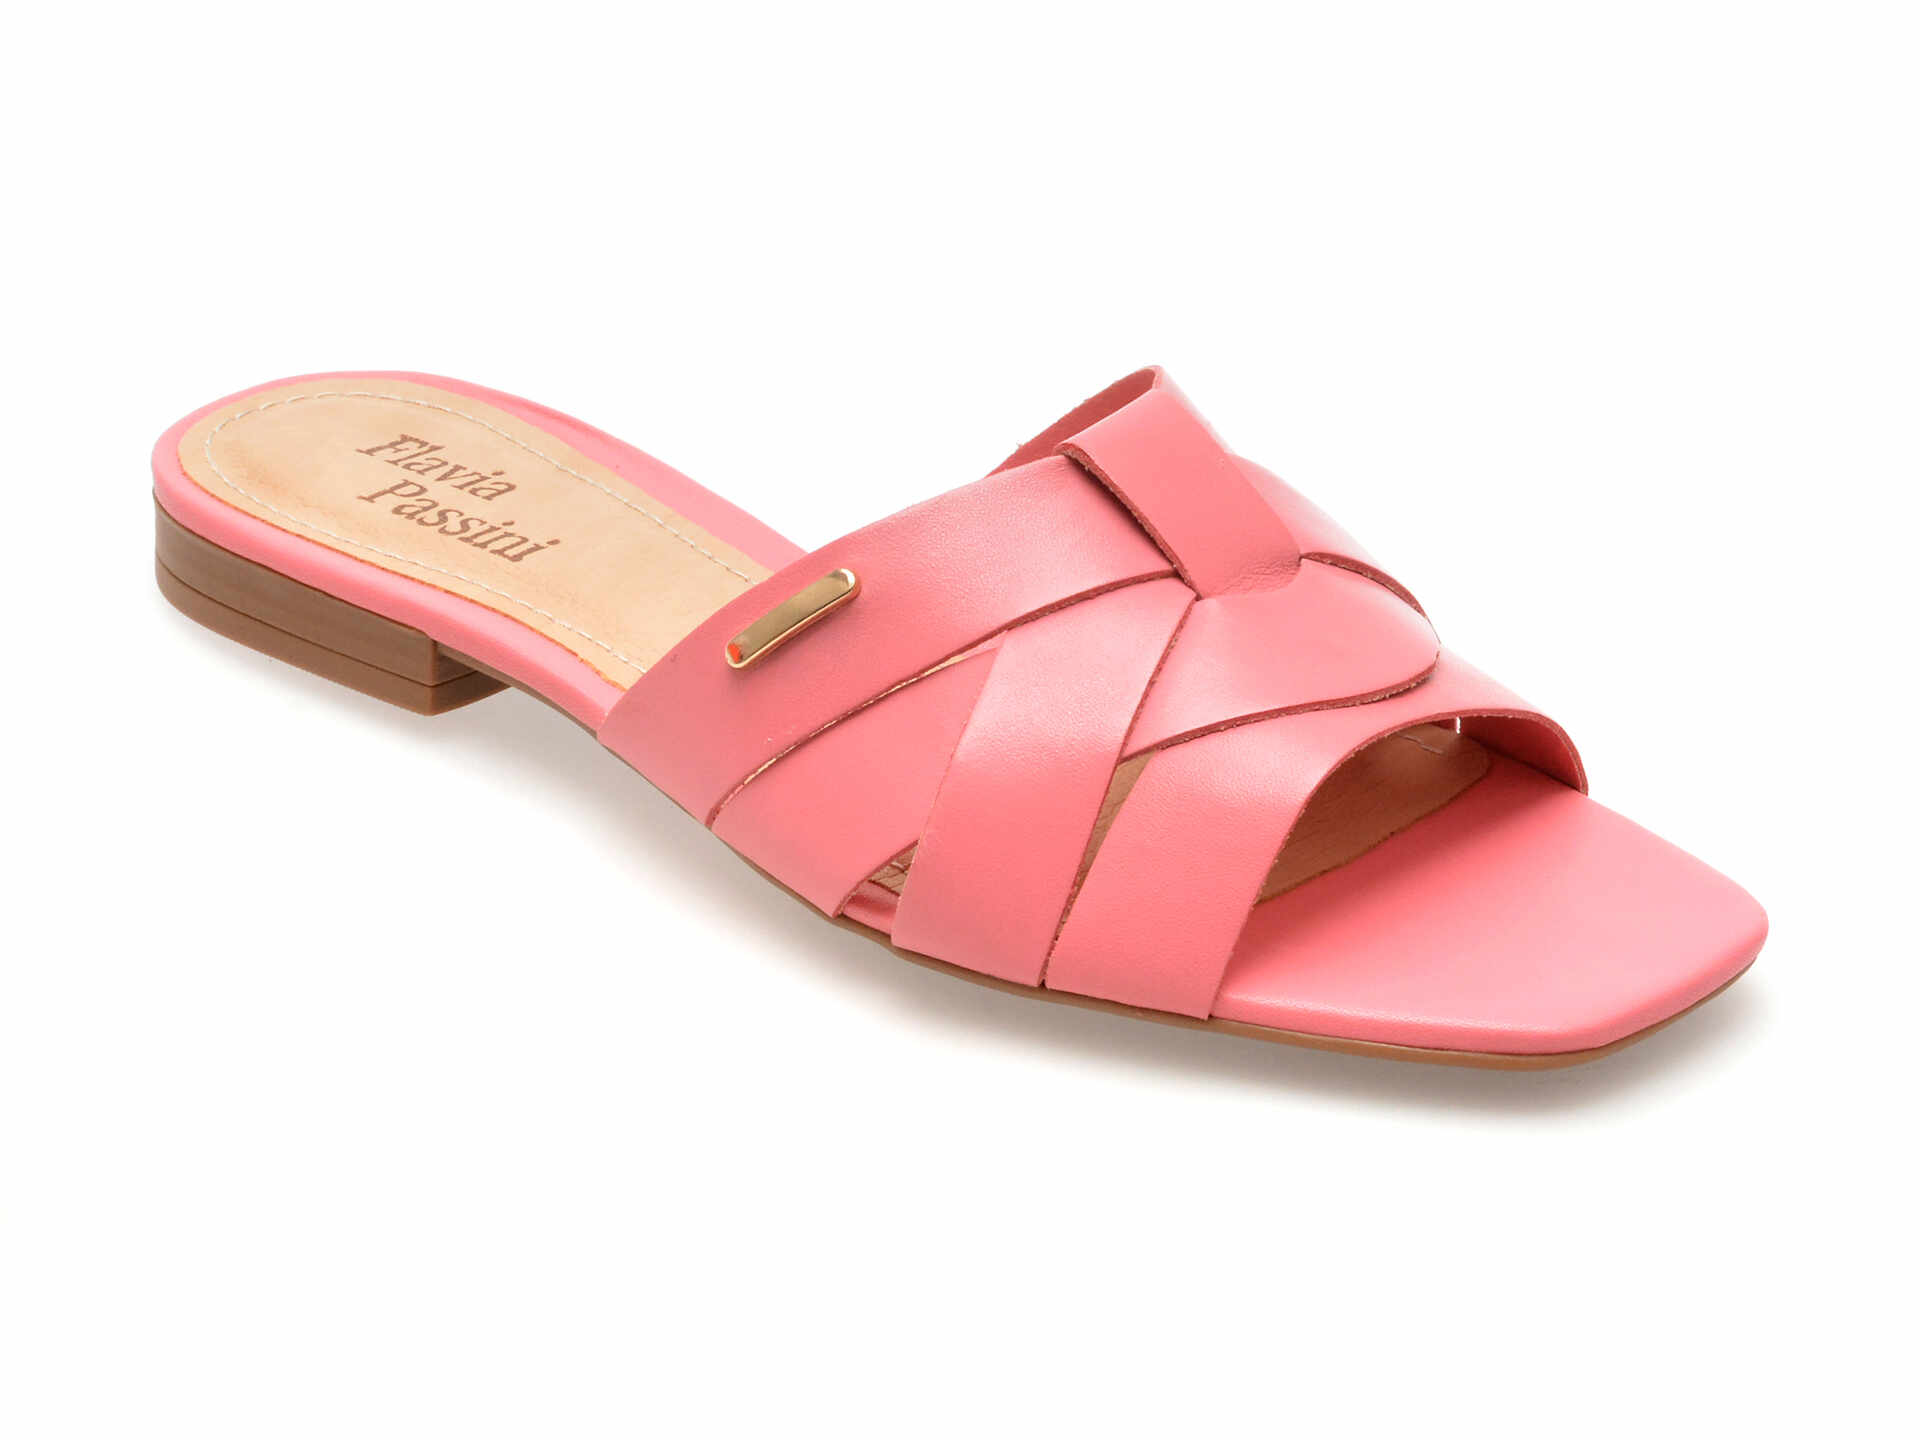 Papuci casual FLAVIA PASSINI roz, 3566011, din piele naturala